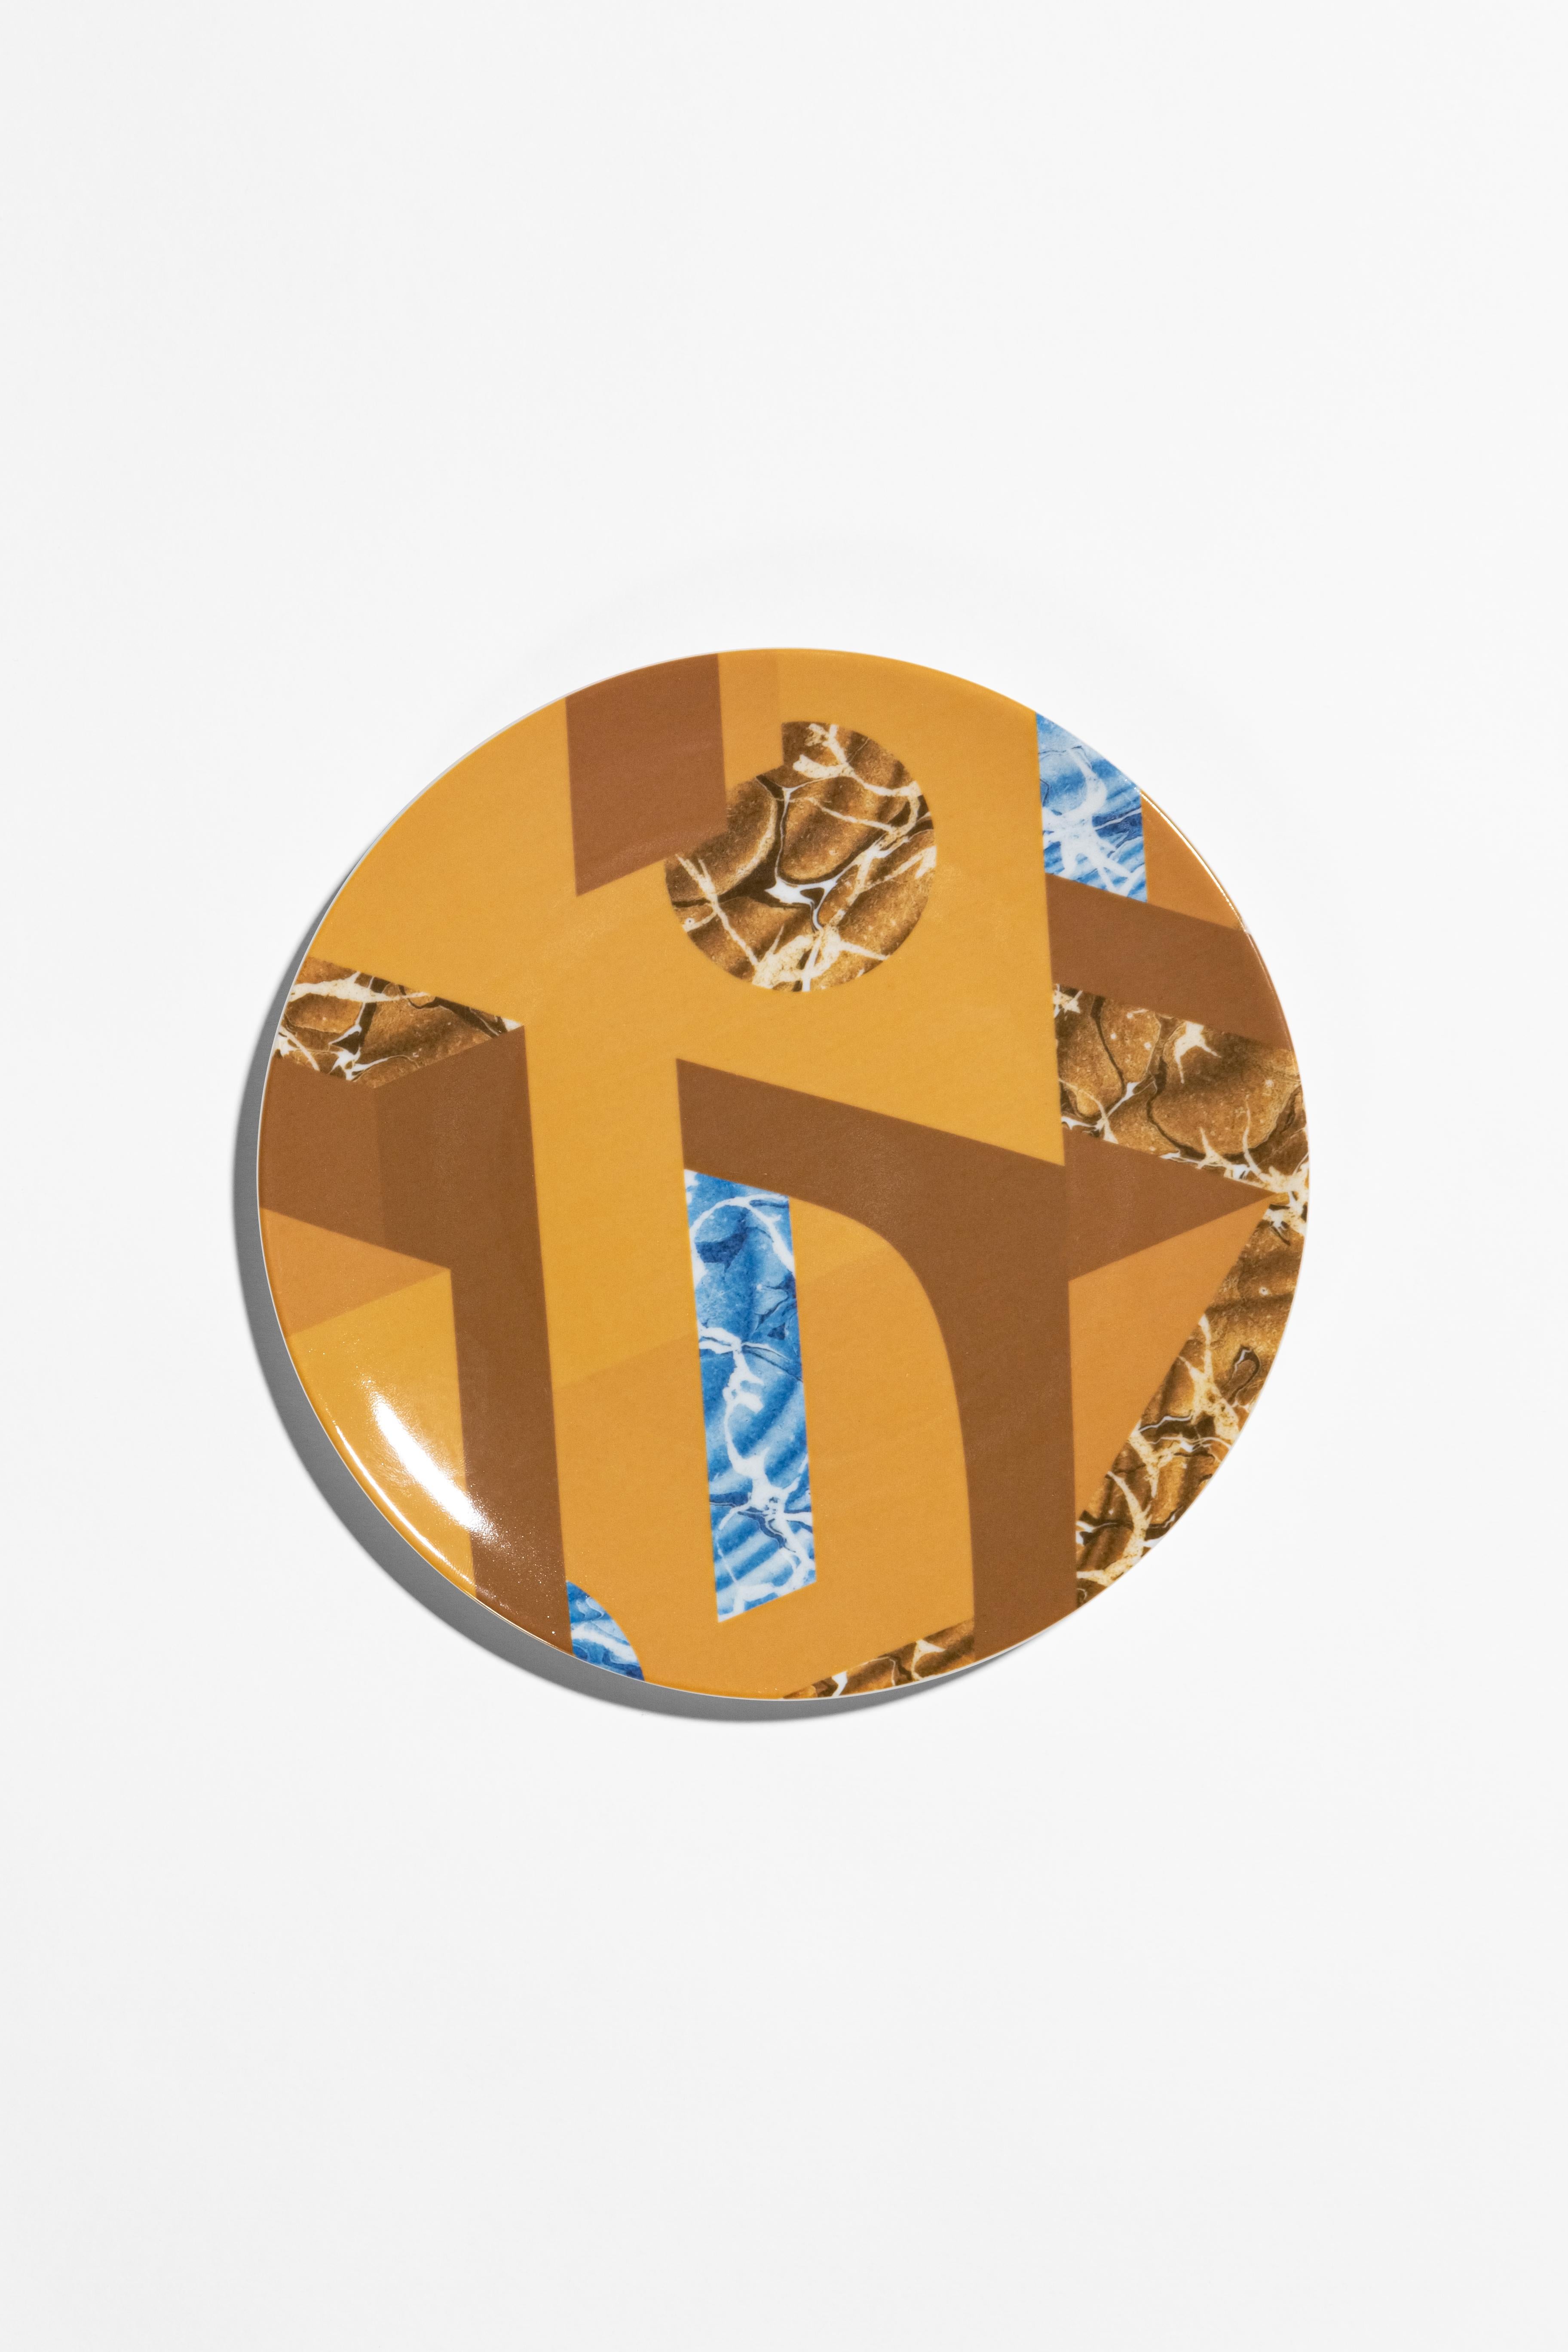 Molded Alchimie, Six Contemporary Porcelain Dessert Plates with Decorative Design For Sale